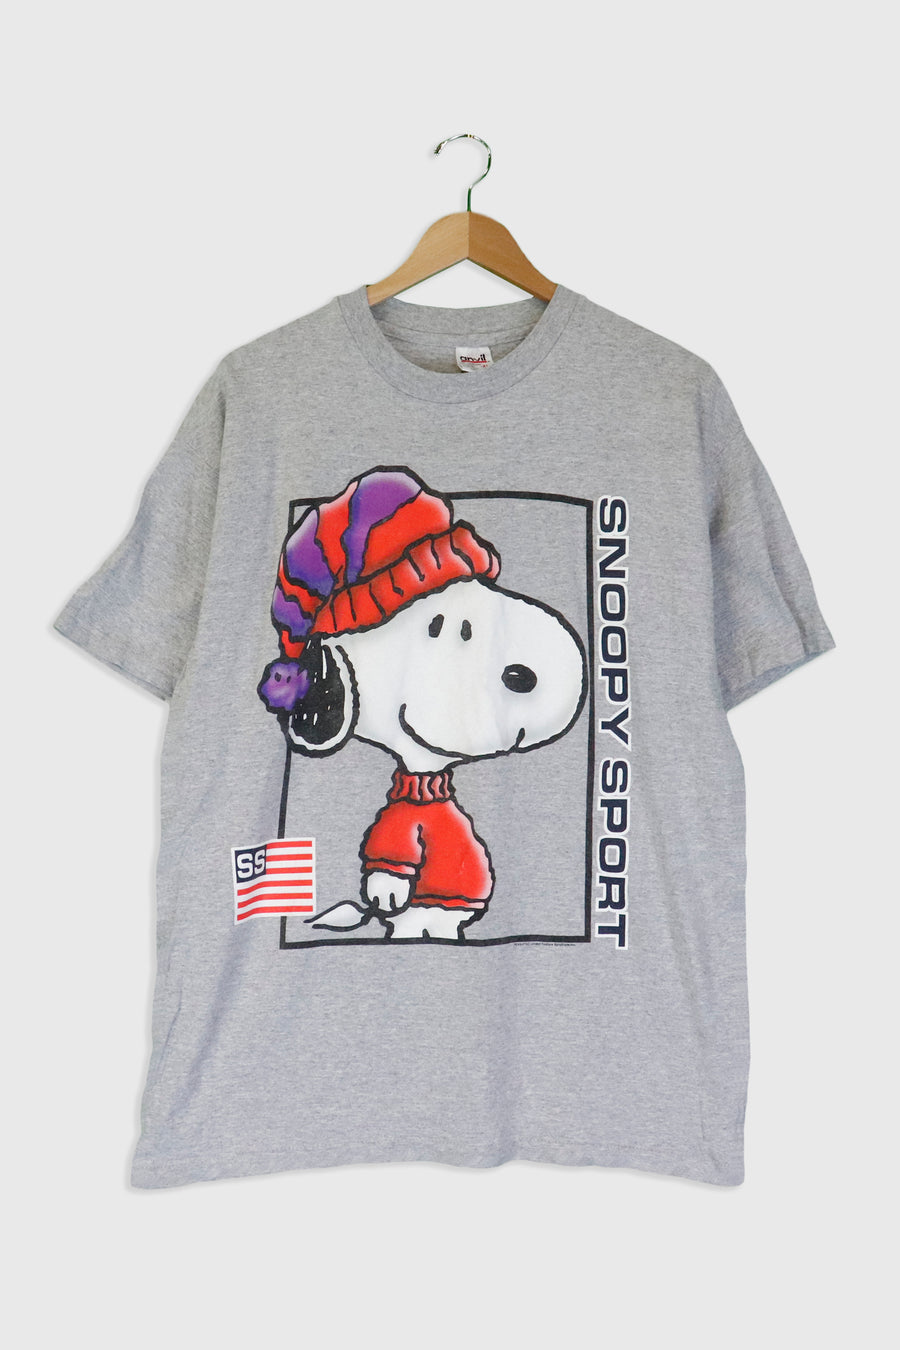 Vintage Snoopy Sport Graphic T Shirt Sz XL